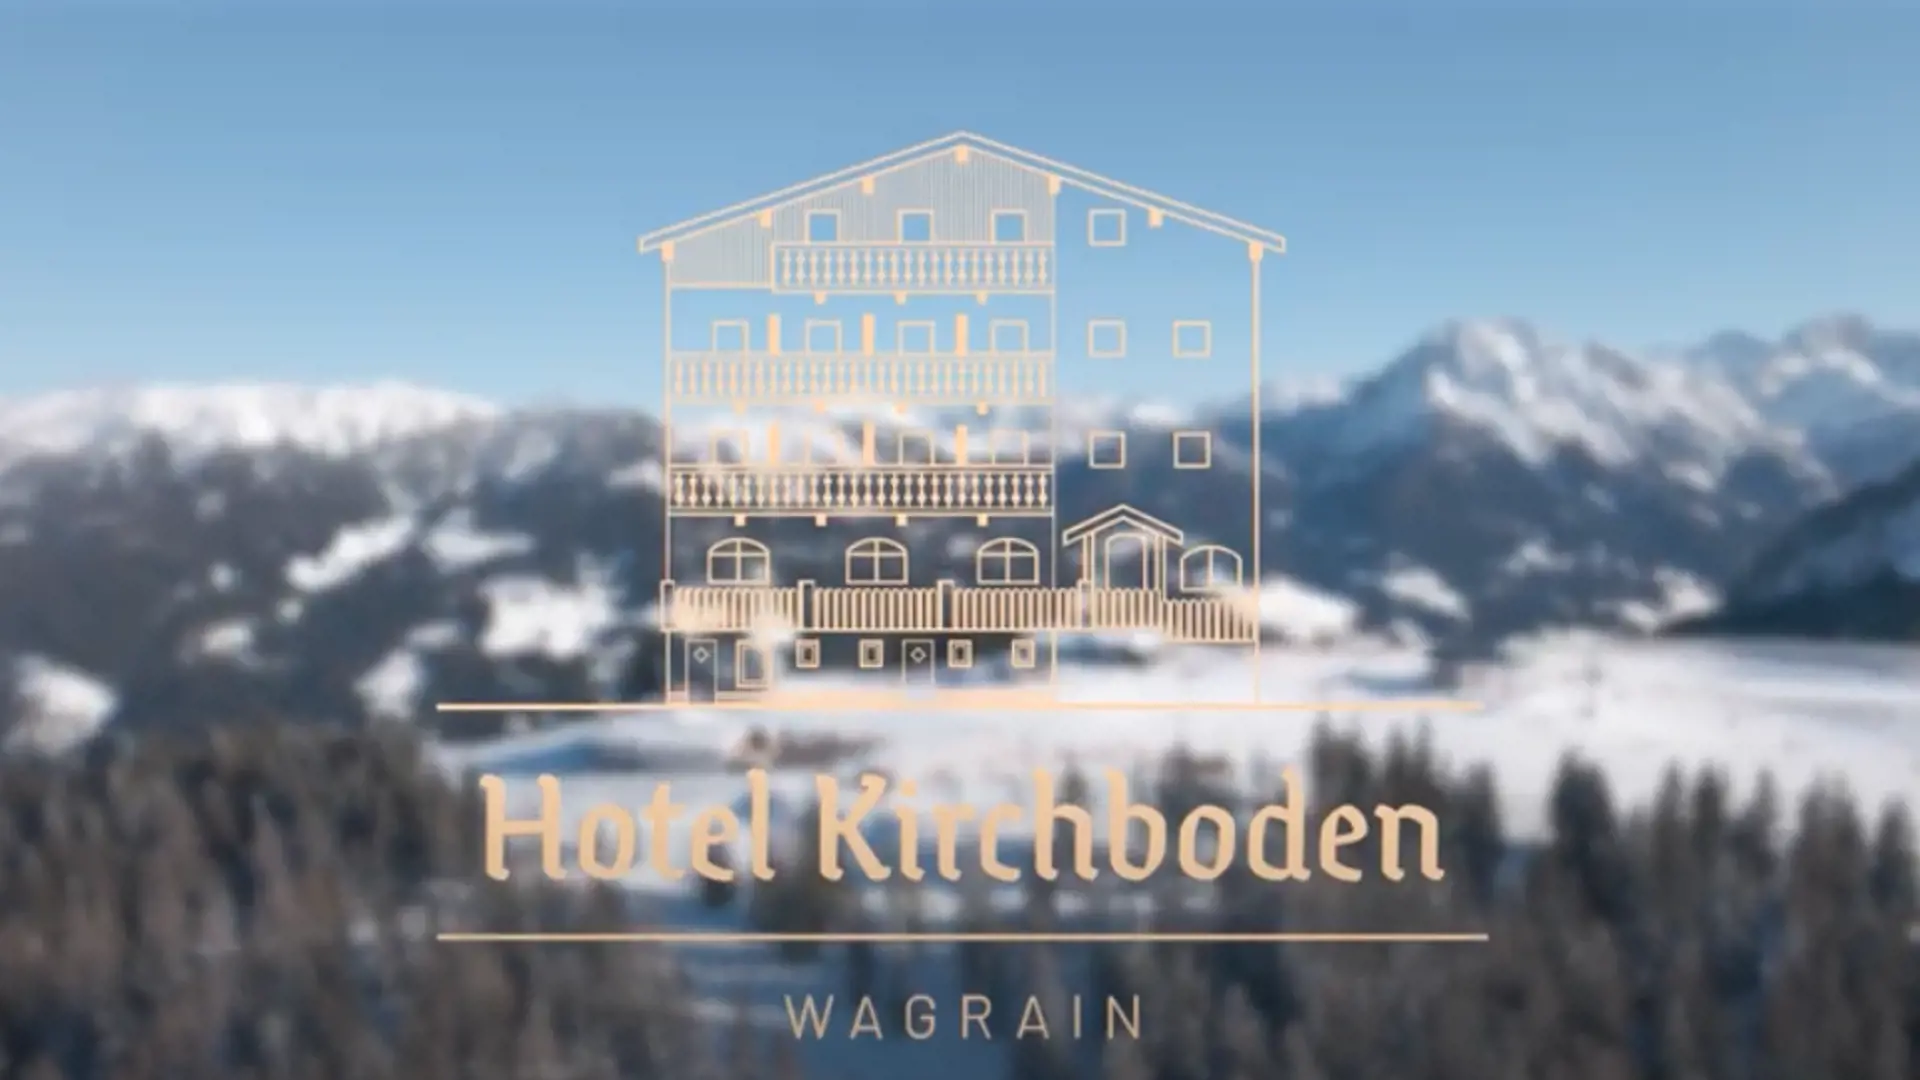 Hotel Kirchboden video LA